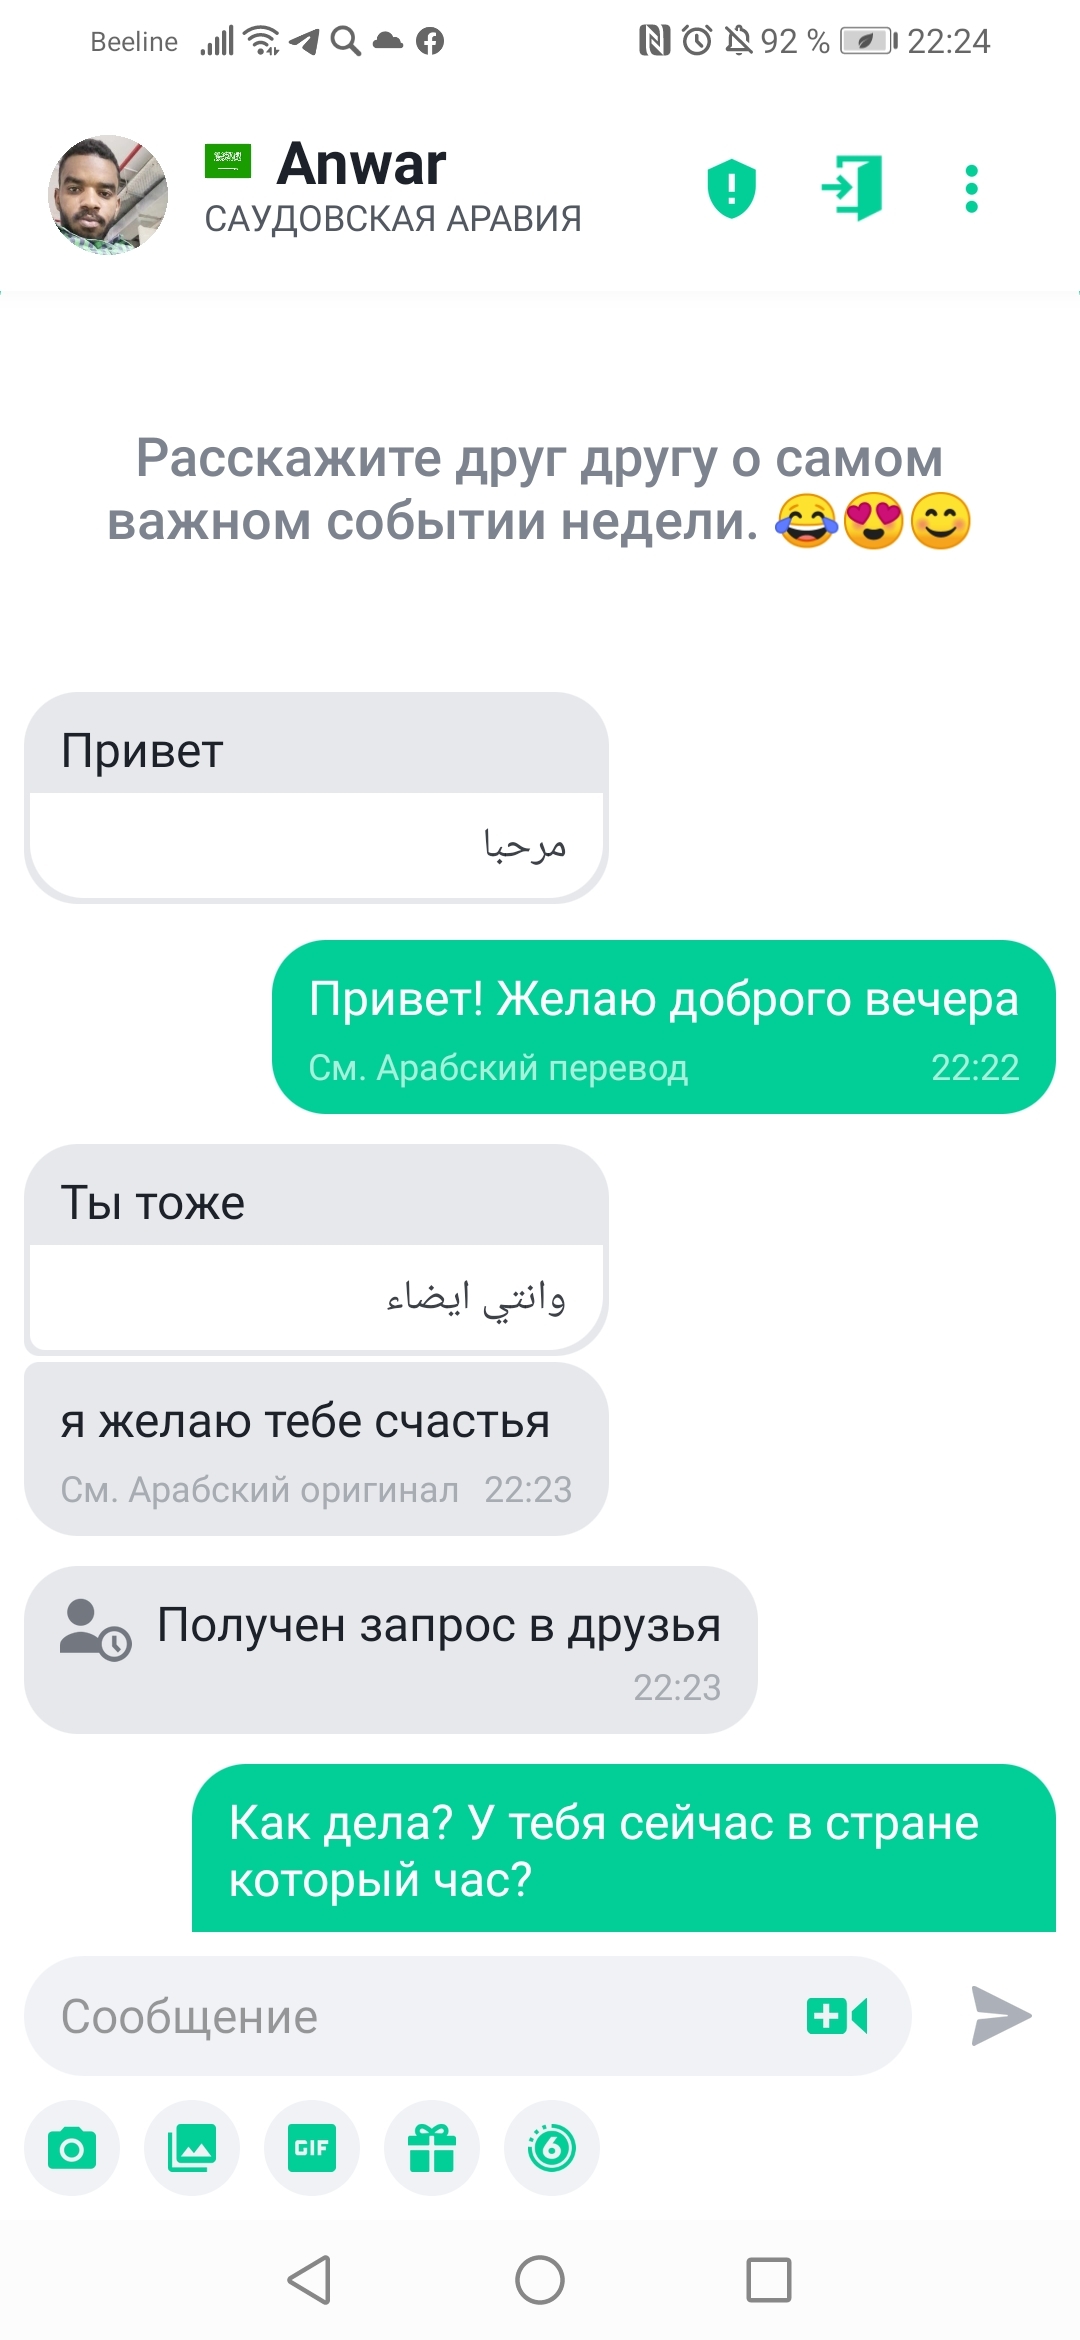 Chat app что это in St. Petersburg